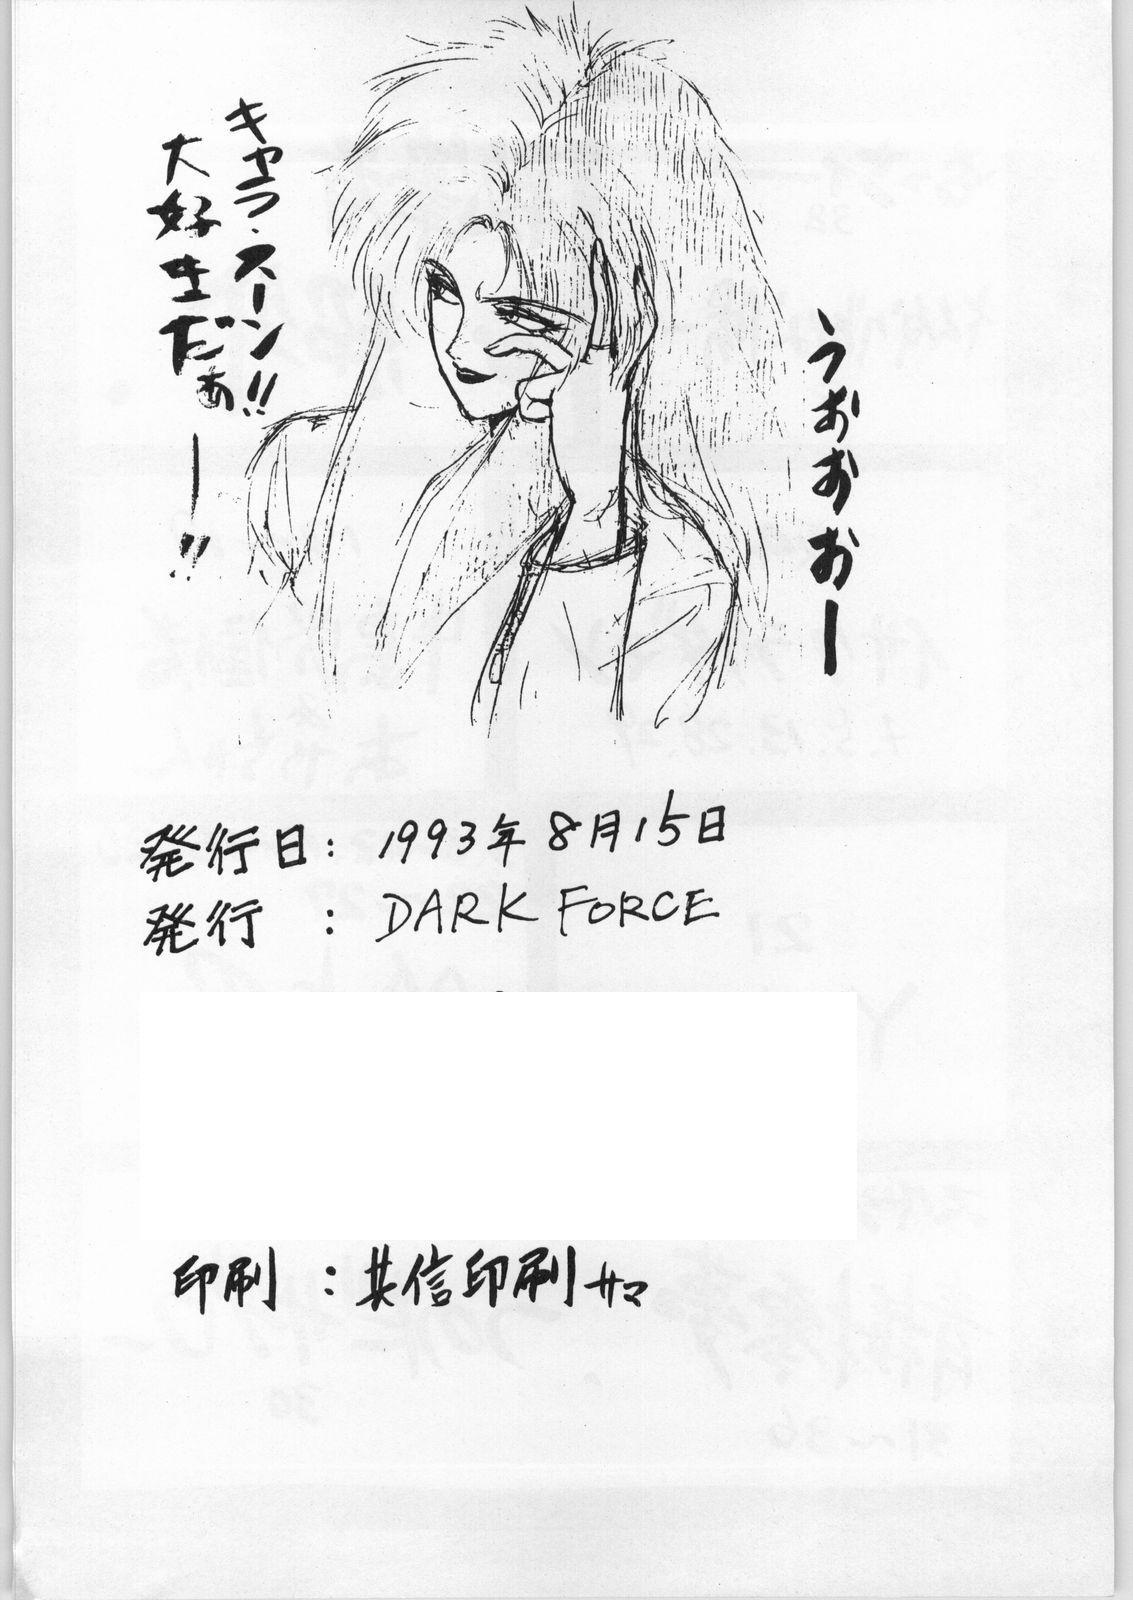 Exhibition Yaen - Street fighter Giant robo Gundam 0083 Blackdick - Page 37